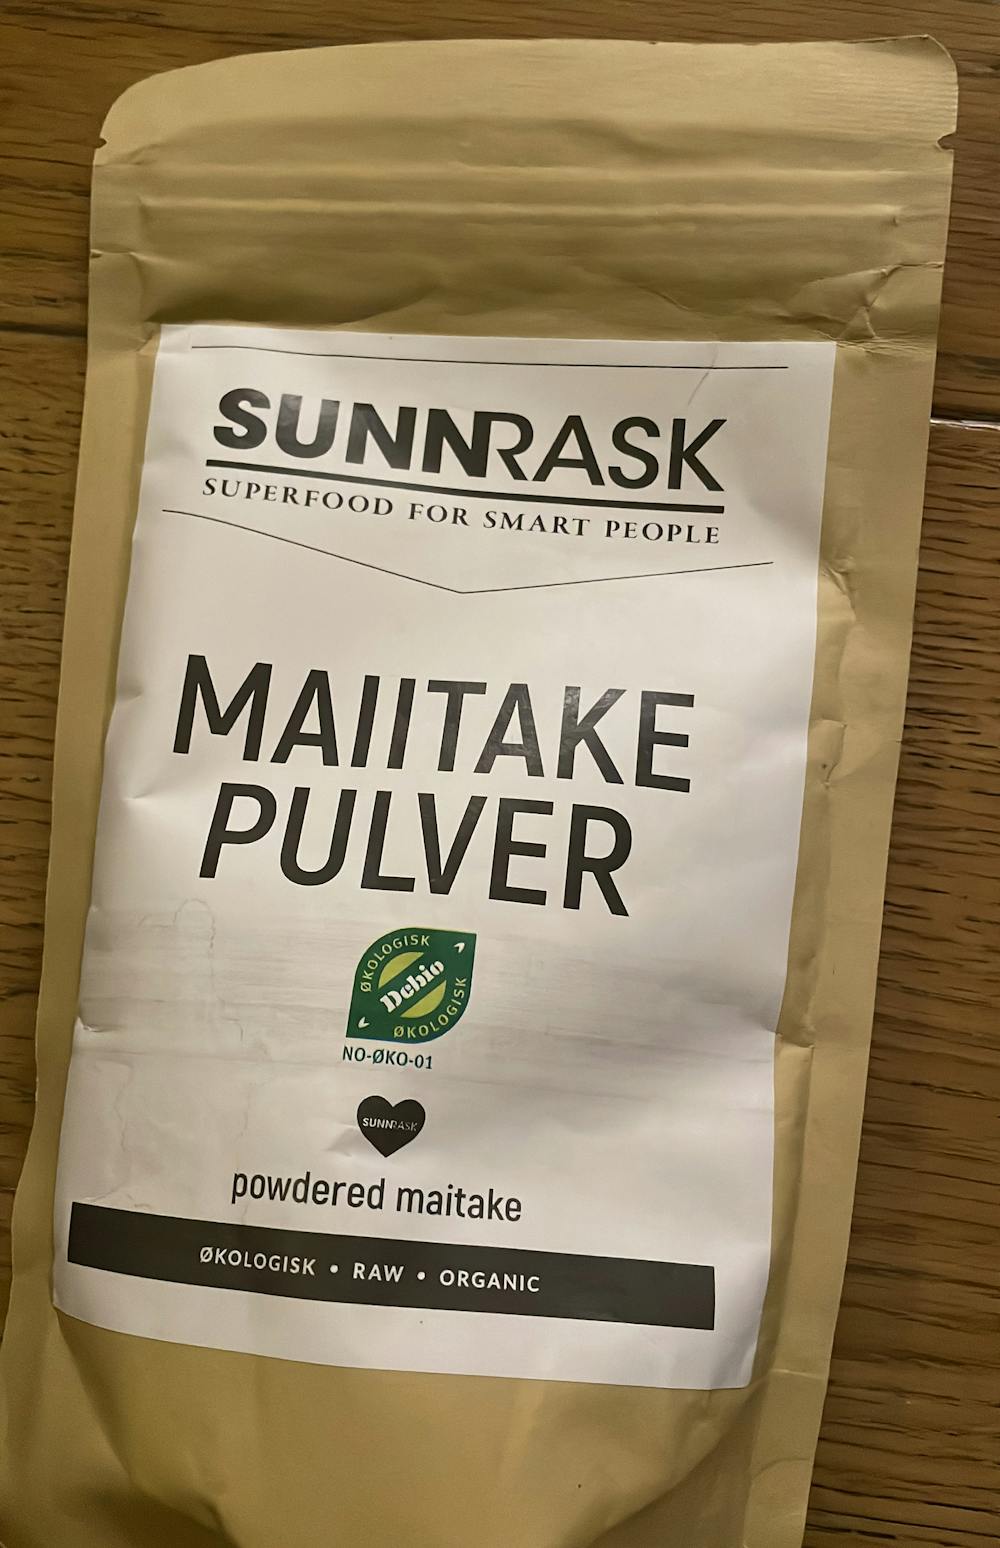 Maitake pulver, SunnRask